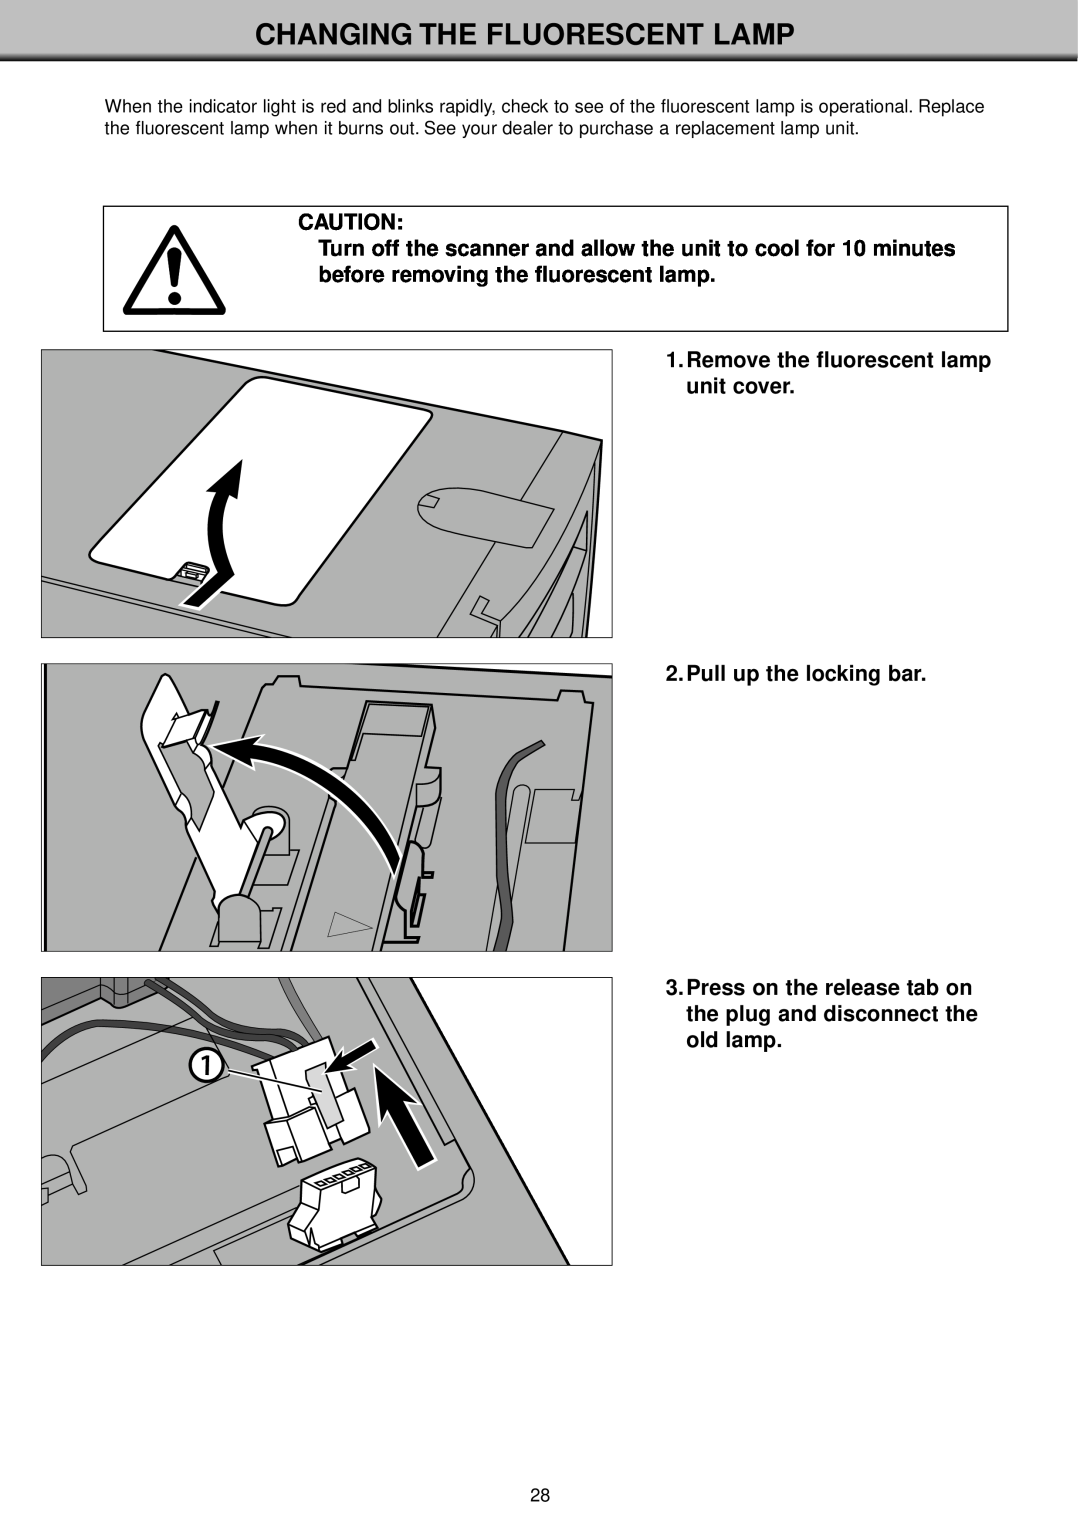 Konica Minolta II manual Changing The Fluorescent Lamp 